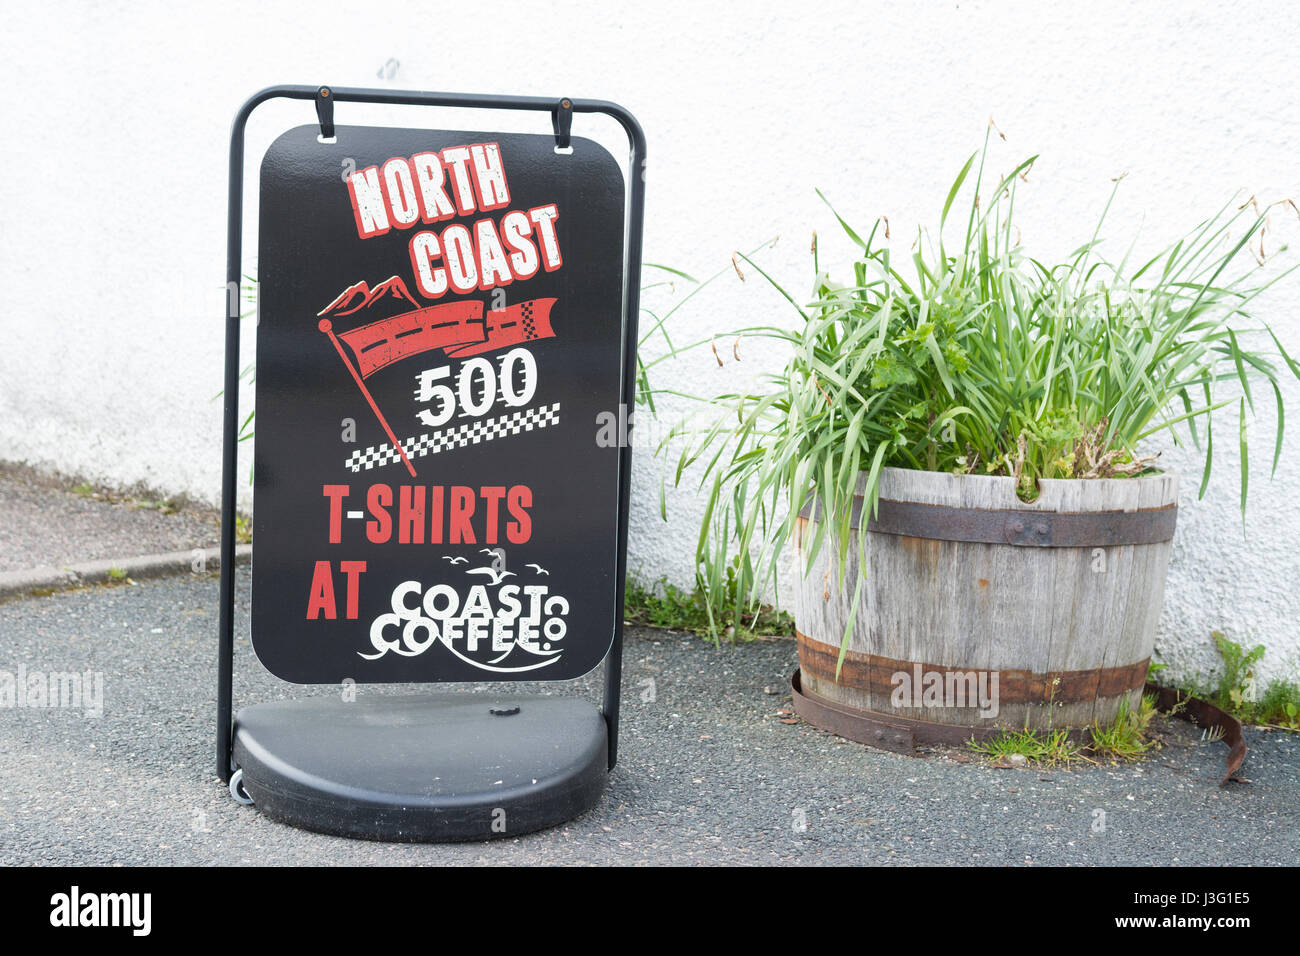 North Coast 500 T-shirts advertised in Gairloch, Scotland, UK Stock Photo